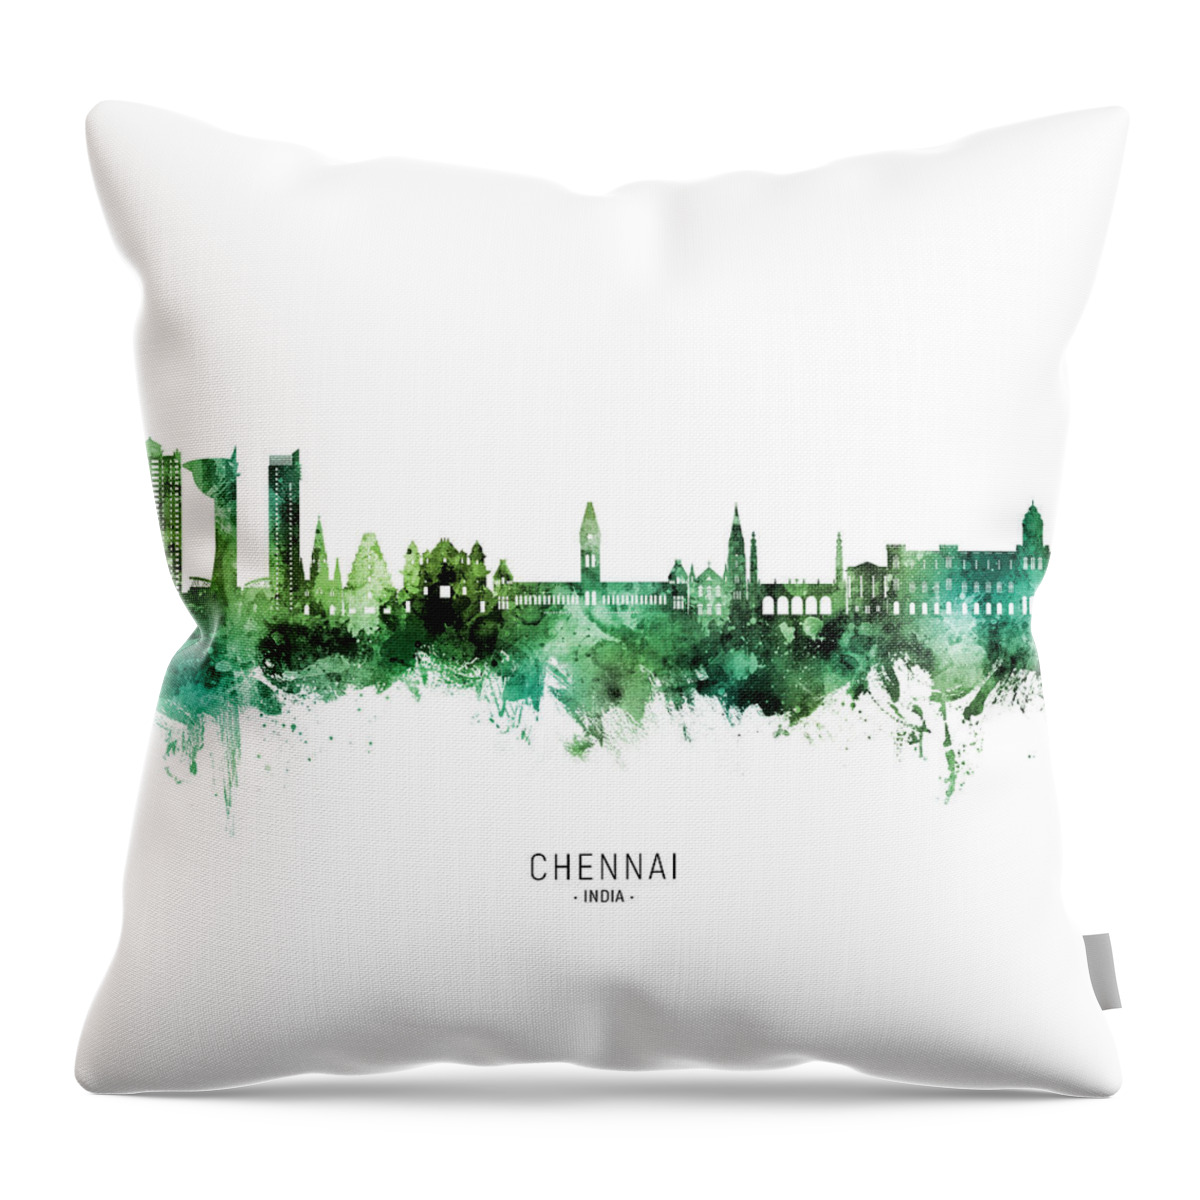 Chennai Throw Pillow featuring the digital art Chennai Skyline India #53 by Michael Tompsett